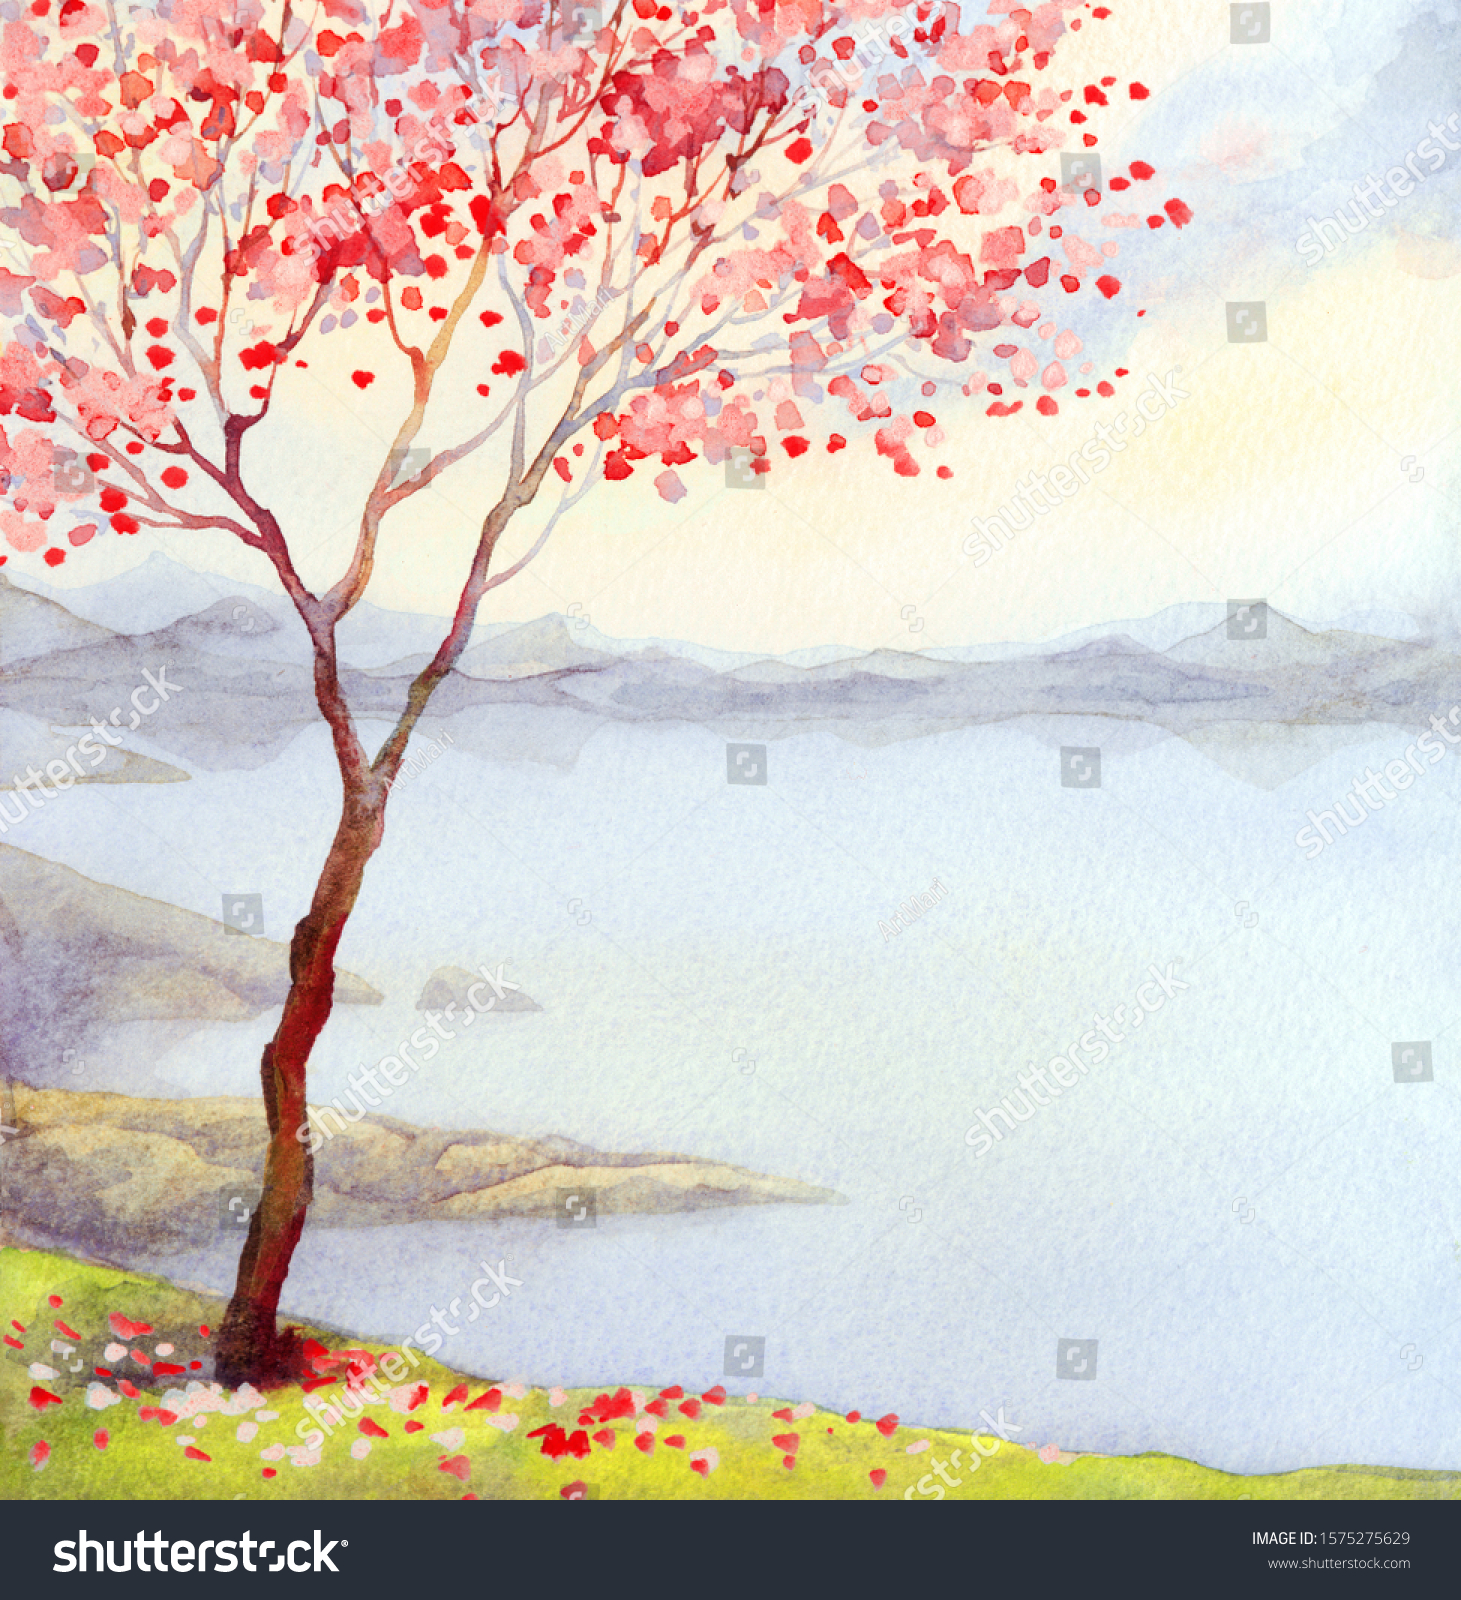 Abstract Landscape Watercolor Drawing Watercolor Painting Original Sketch  Original Drawing  agrohortipbacid